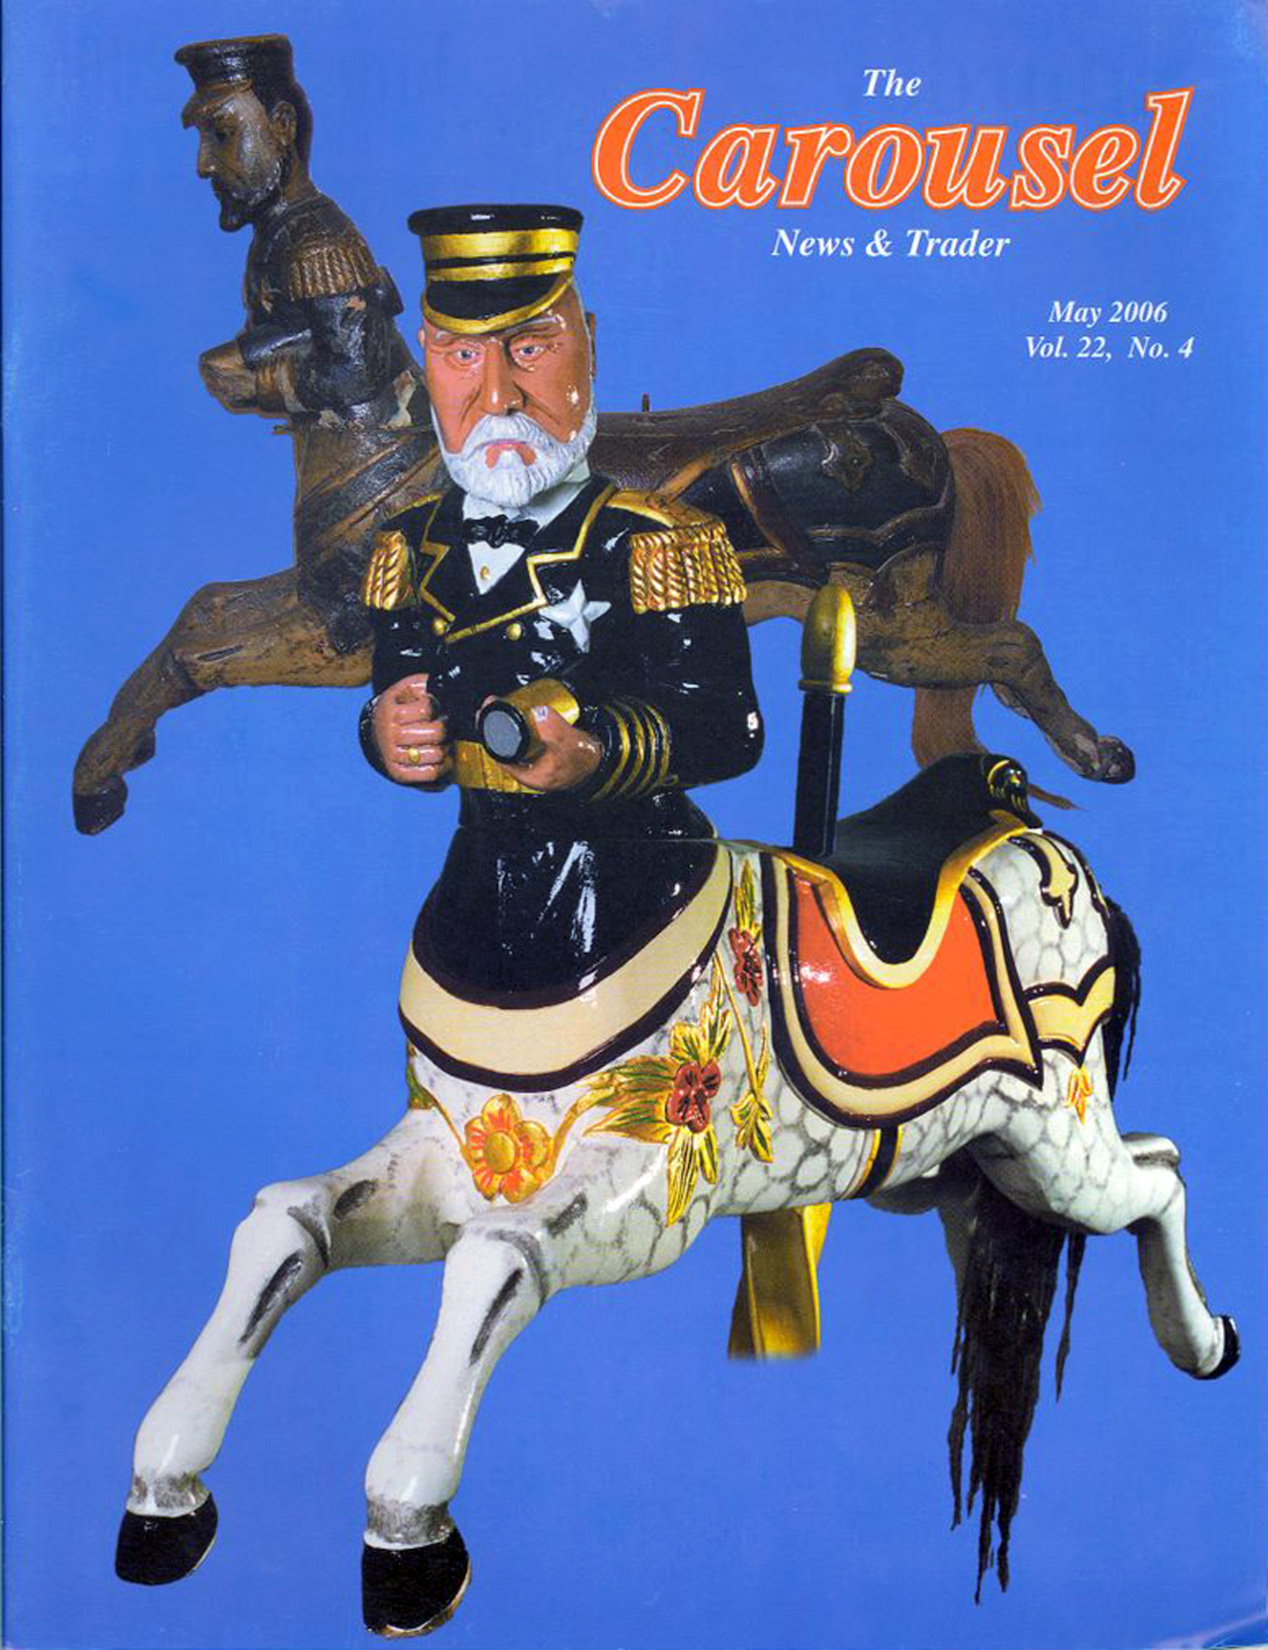 Carousel-news-cover-5_2006-English-Anderson-centaur-Captain-Edward-Smith-Boer-War